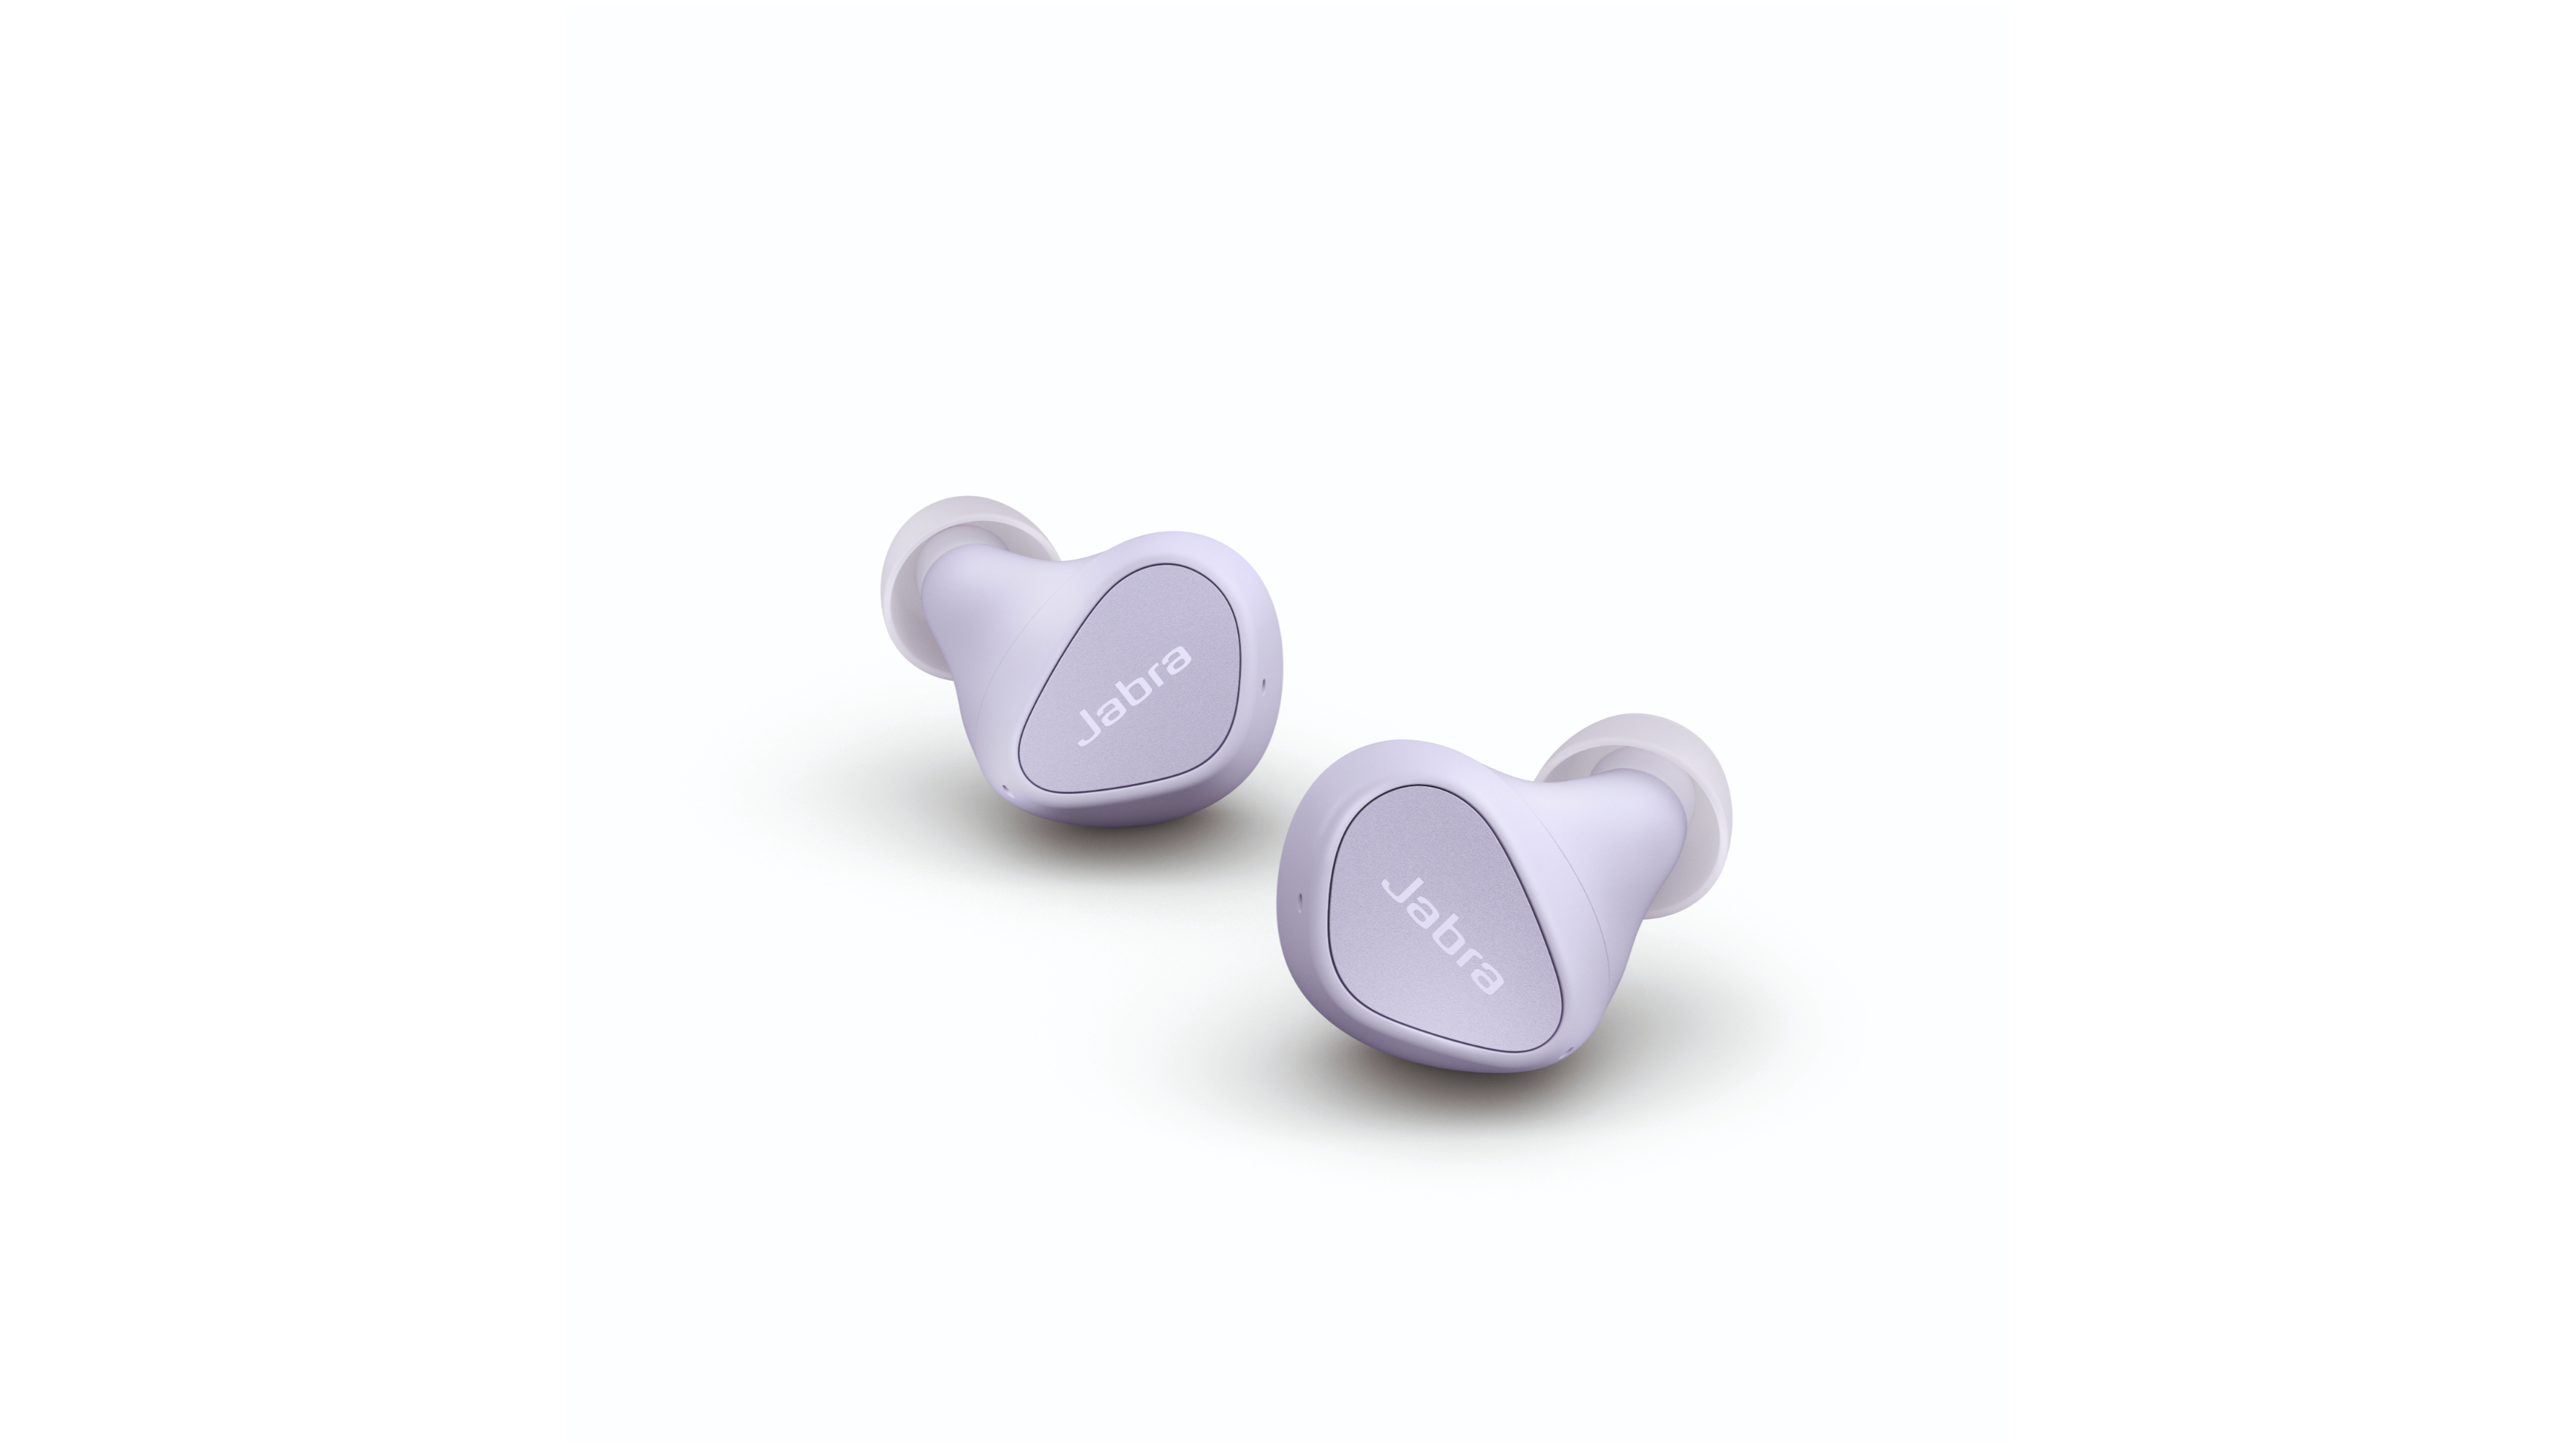 Jabra Elite 4 ANC wireless earbuds